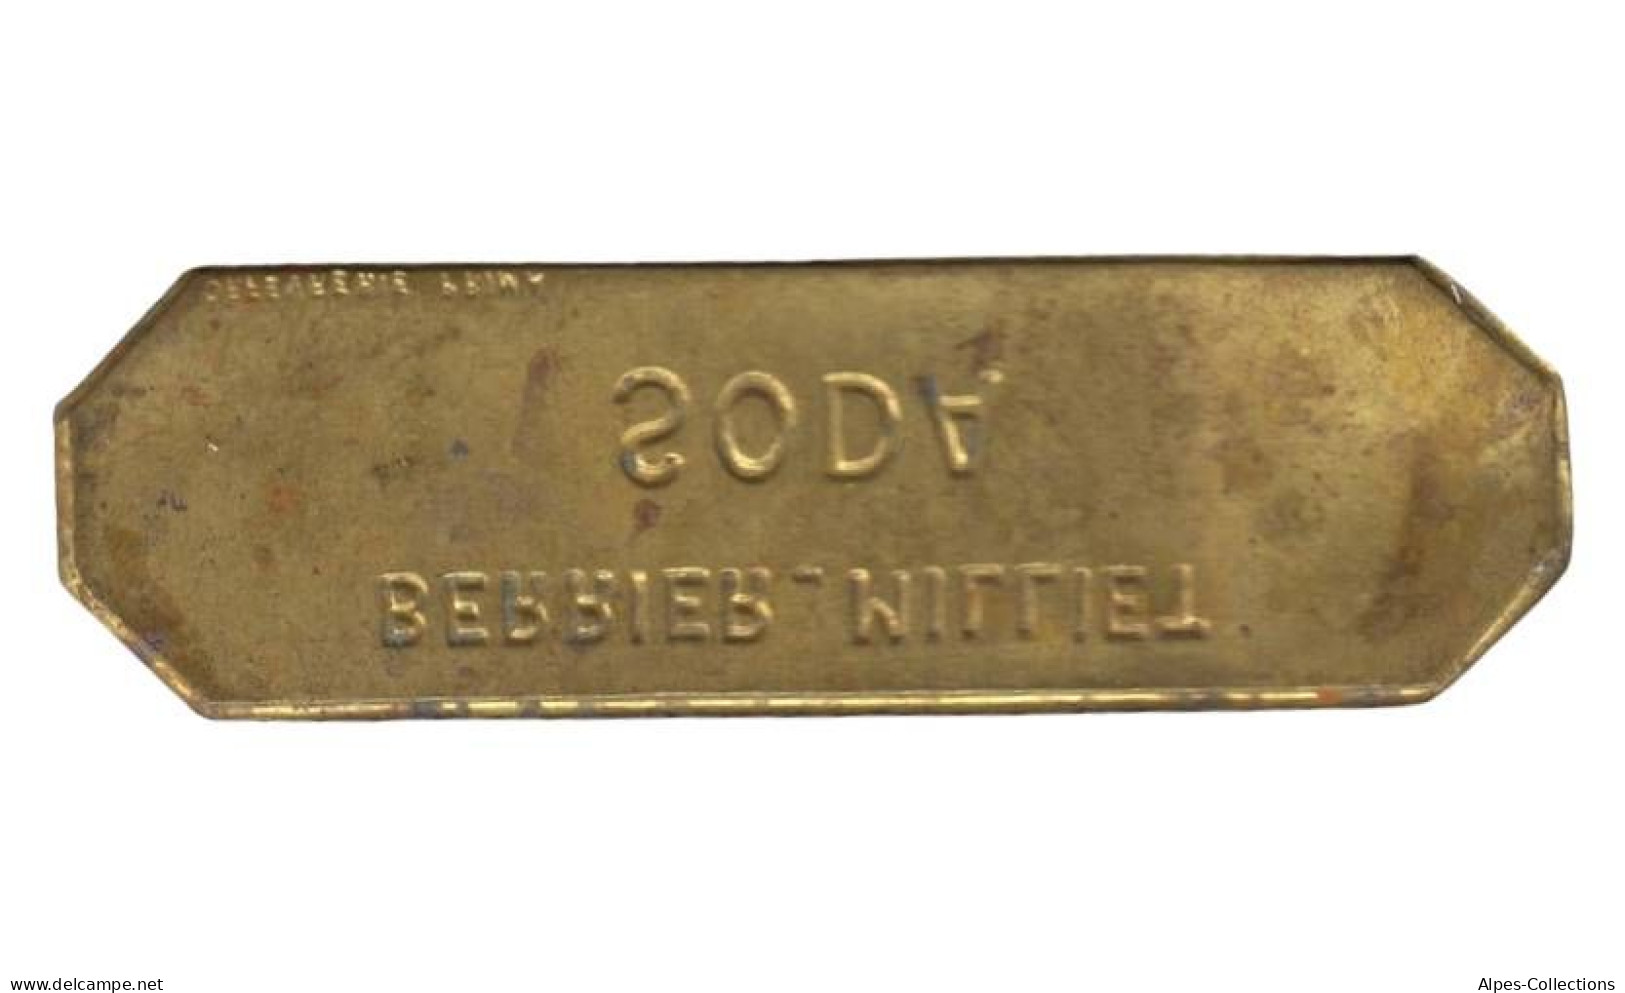 LYON - NR03 - Monnaie De Nécessité - Soda Berrier Milliet - Monetary / Of Necessity